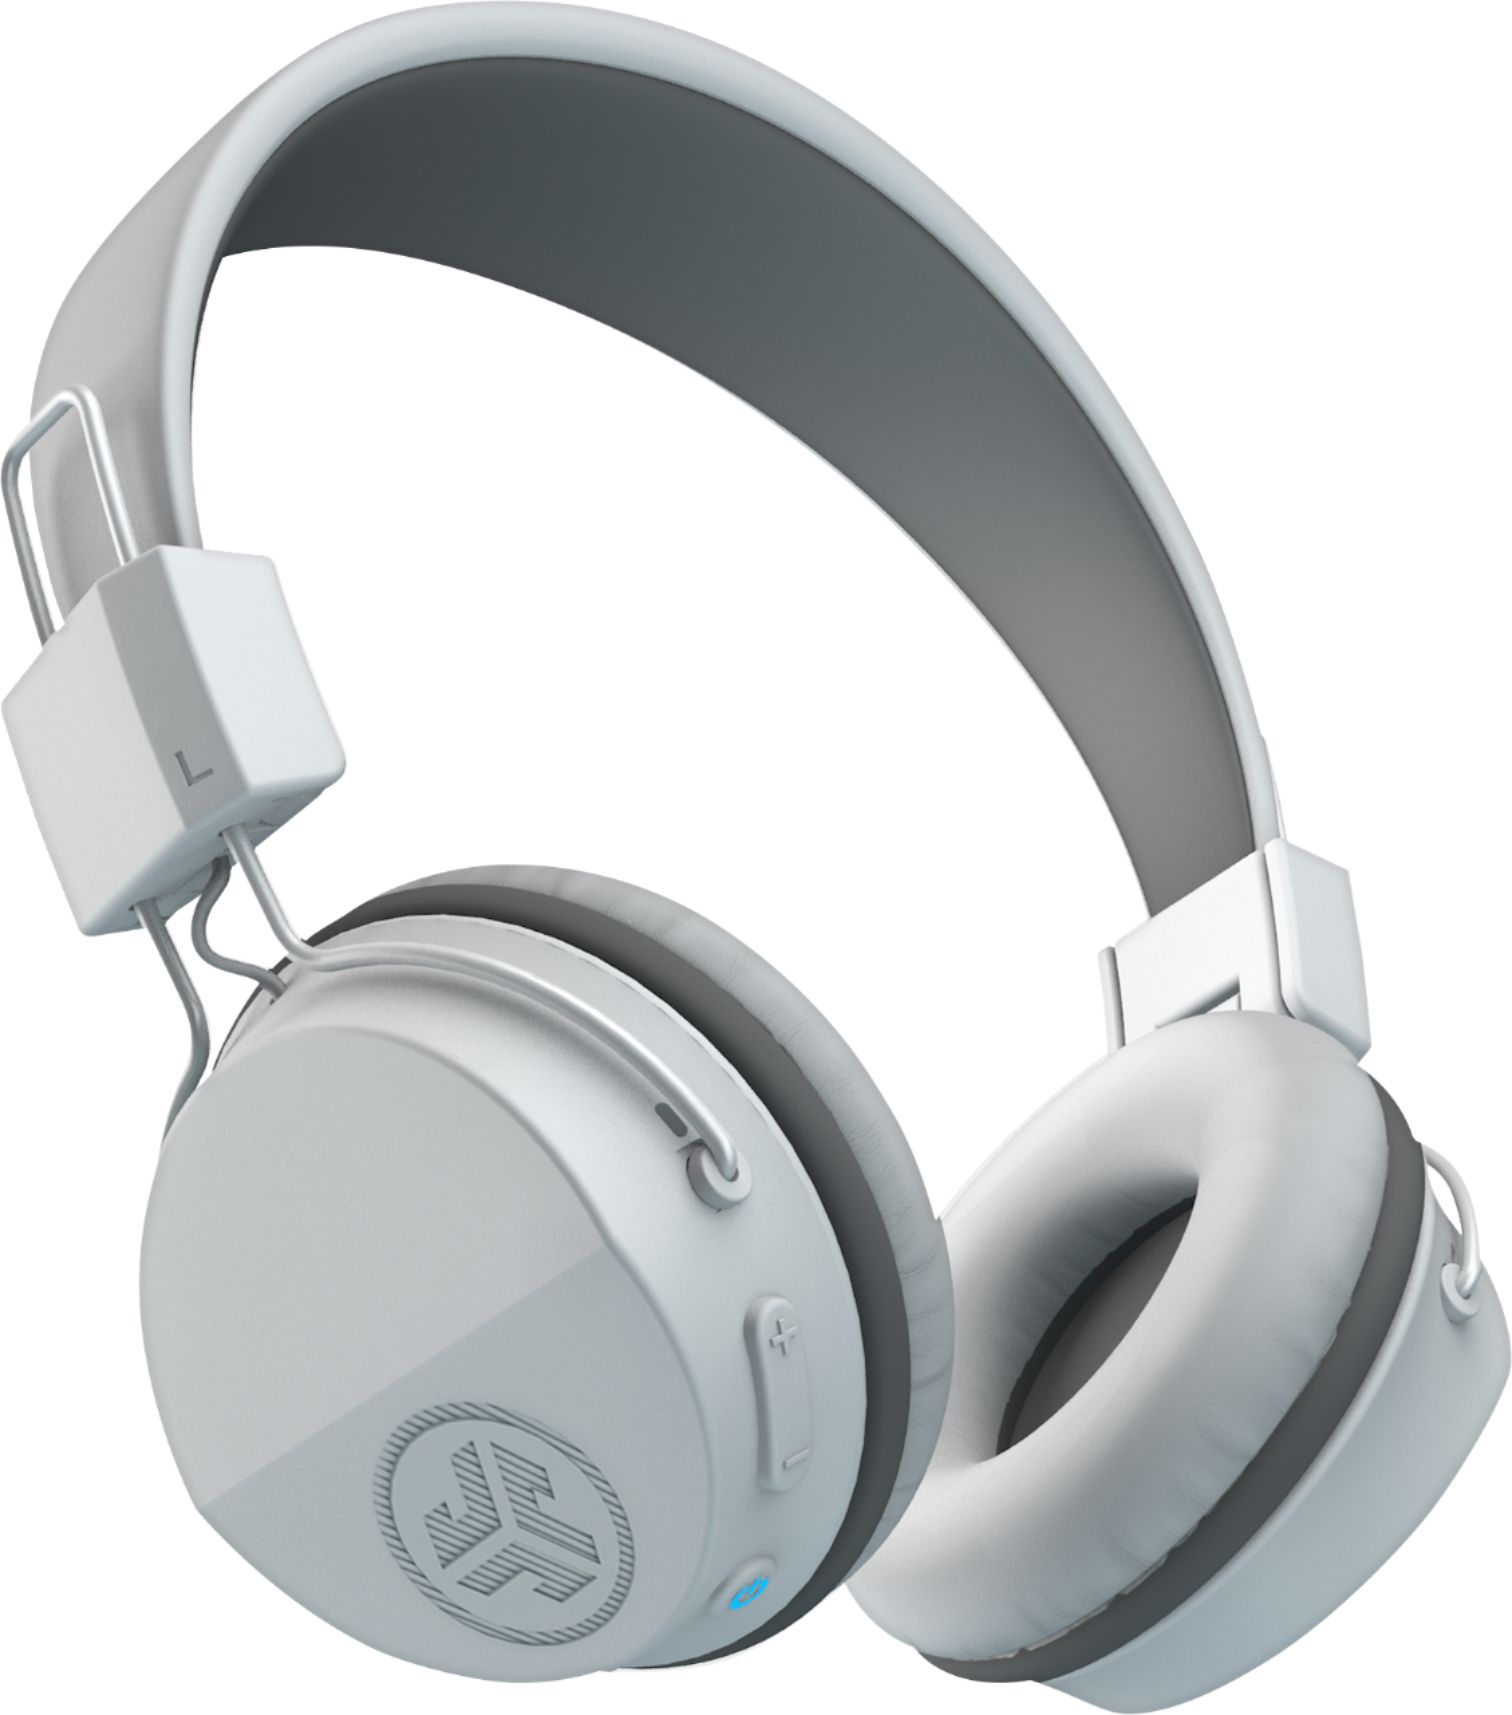 Angle View: JLab - Neon Wireless On-Ear Headphones - White